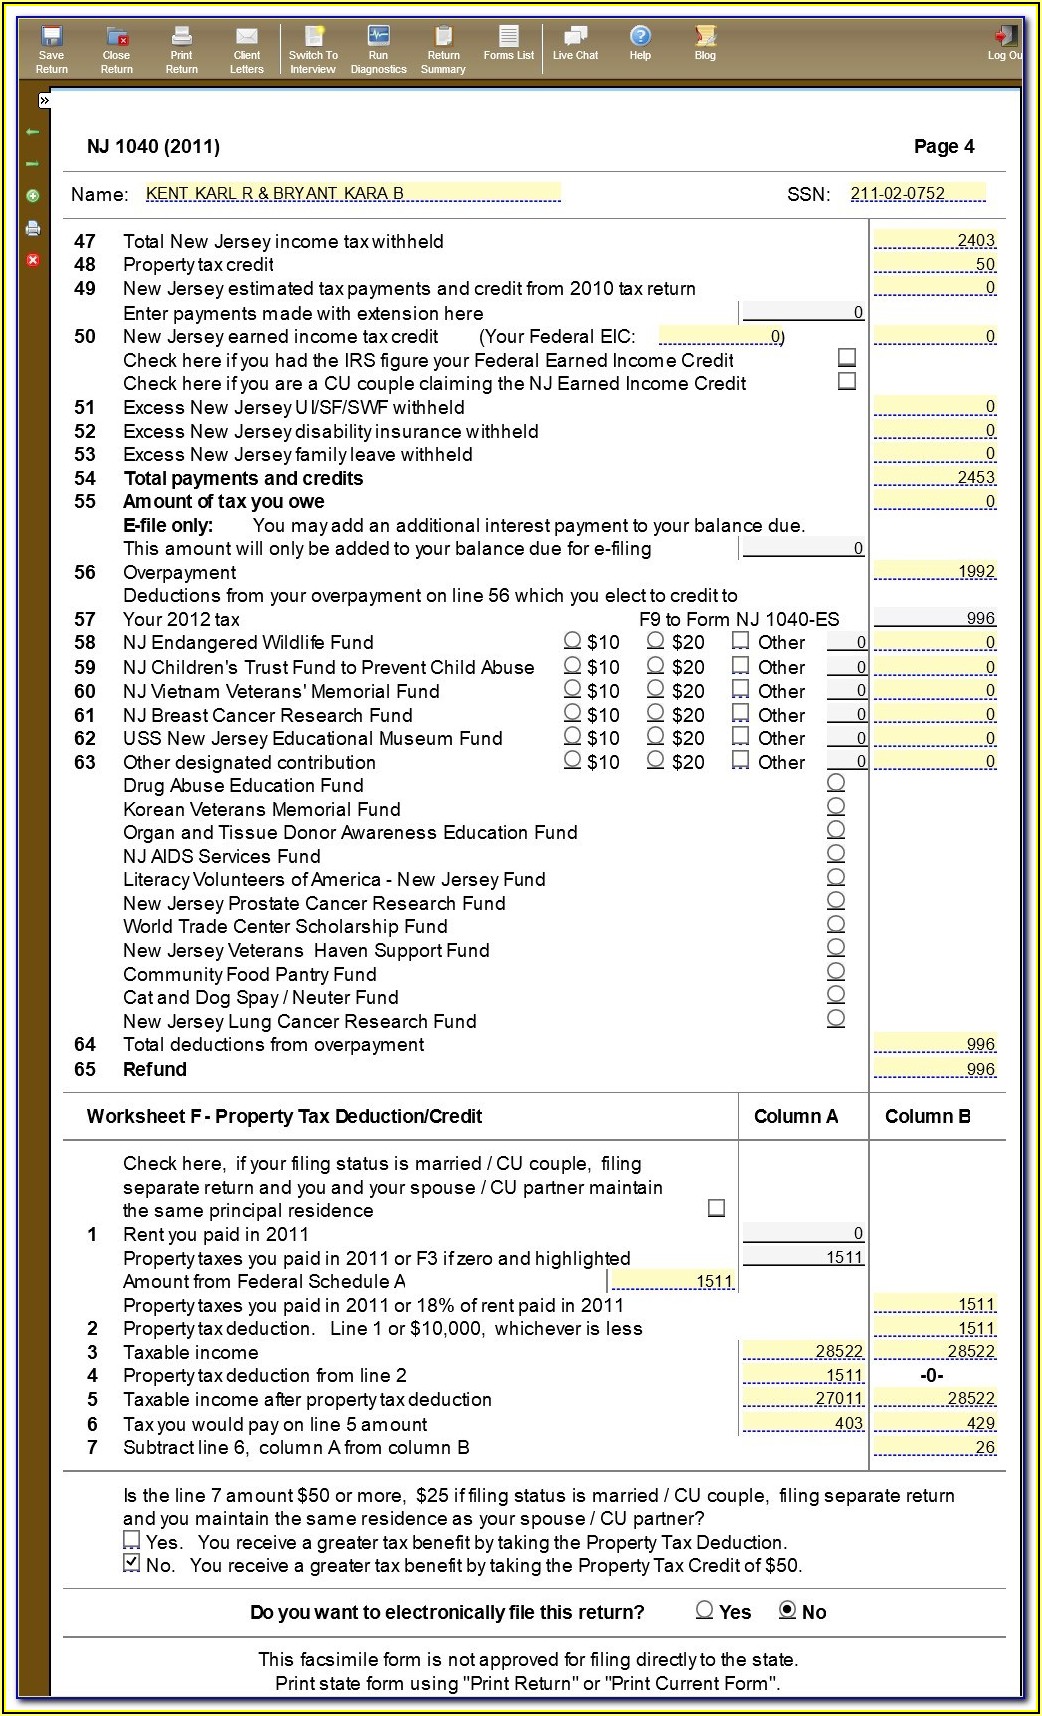 nj-1040-tax-form-instructions-form-resume-examples-qj9ea6p9my